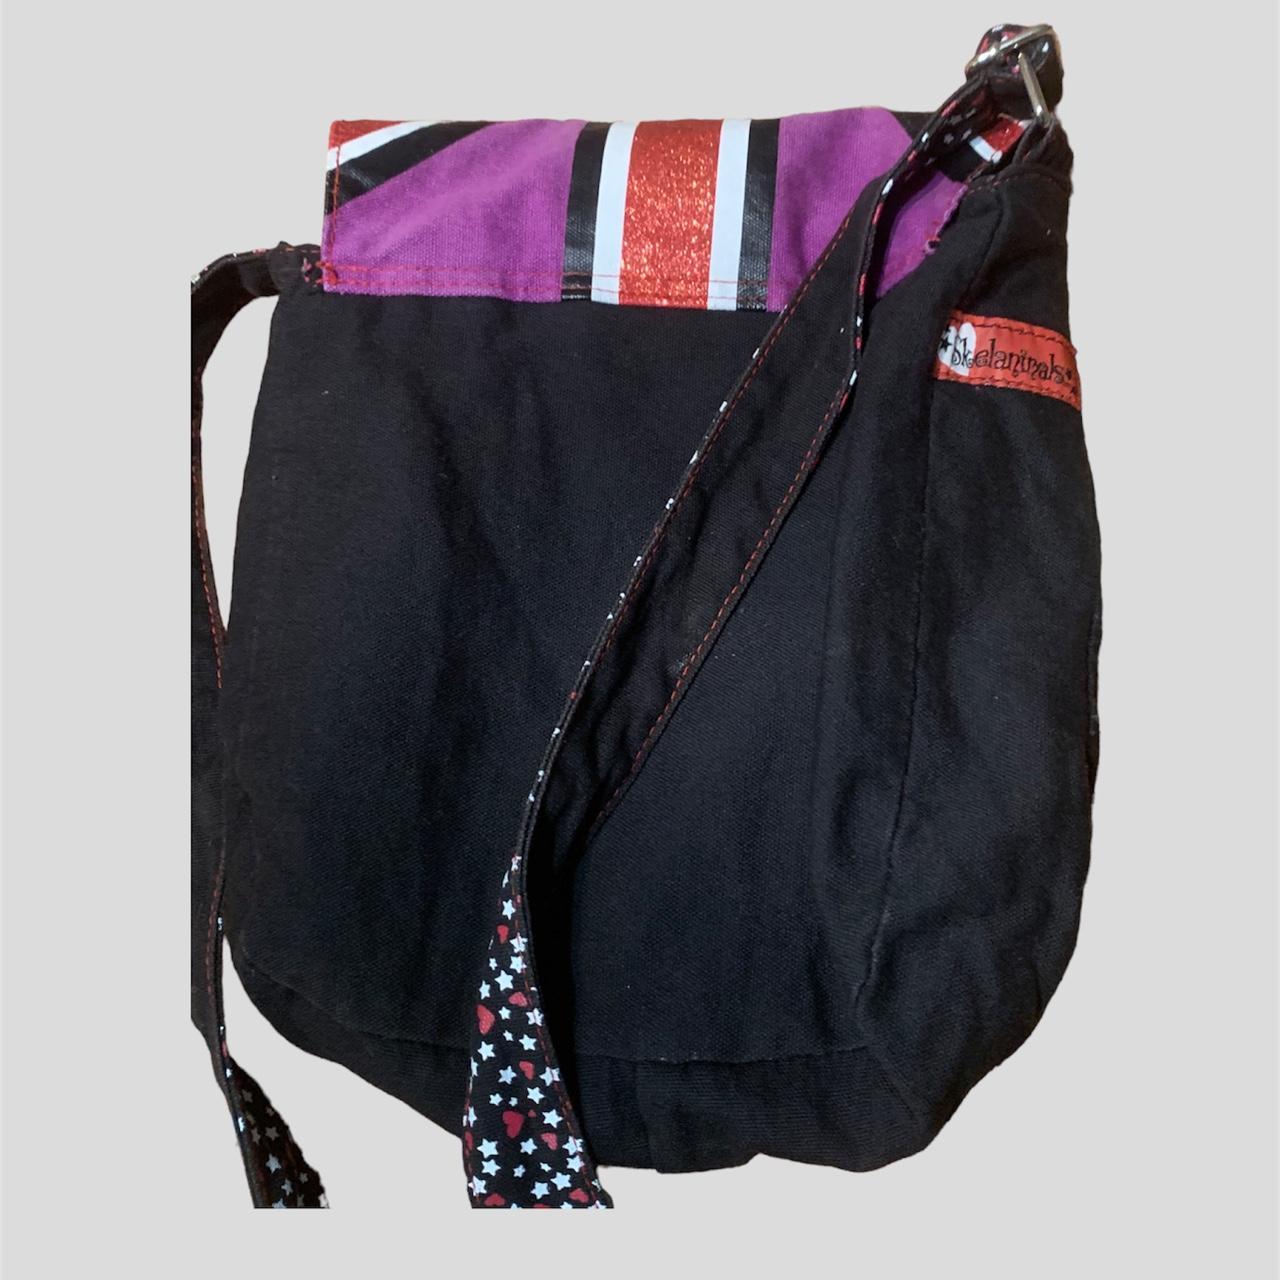 Product Image 4 - ☠️ RARE SKELANIMALS BAG ☠️
-